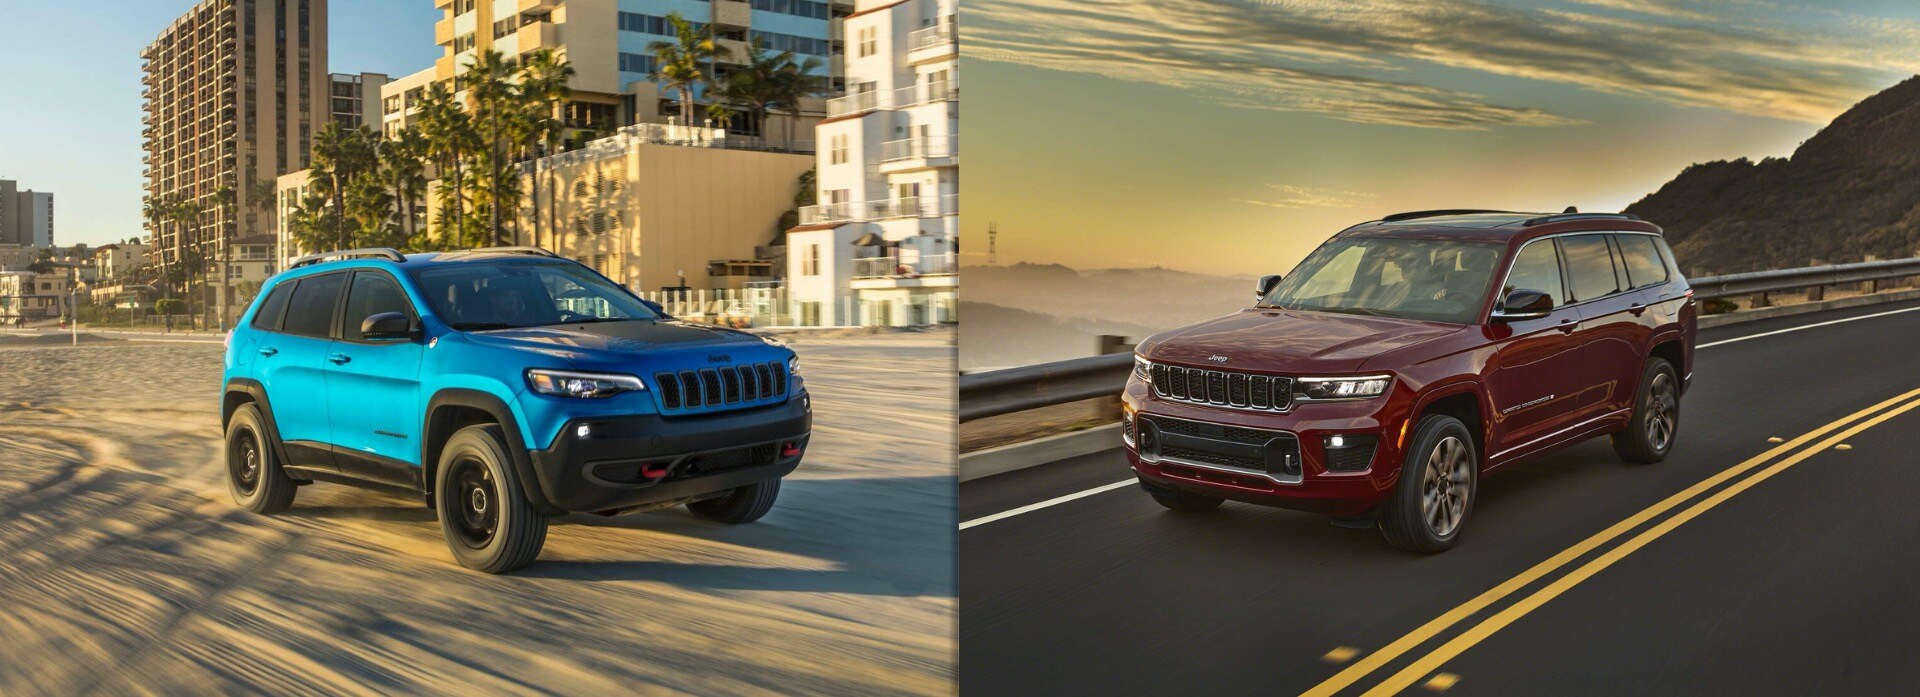 Jeep Cherokee 2021 vs Jeep Grand Cherokee 2021: Lequel choisir?